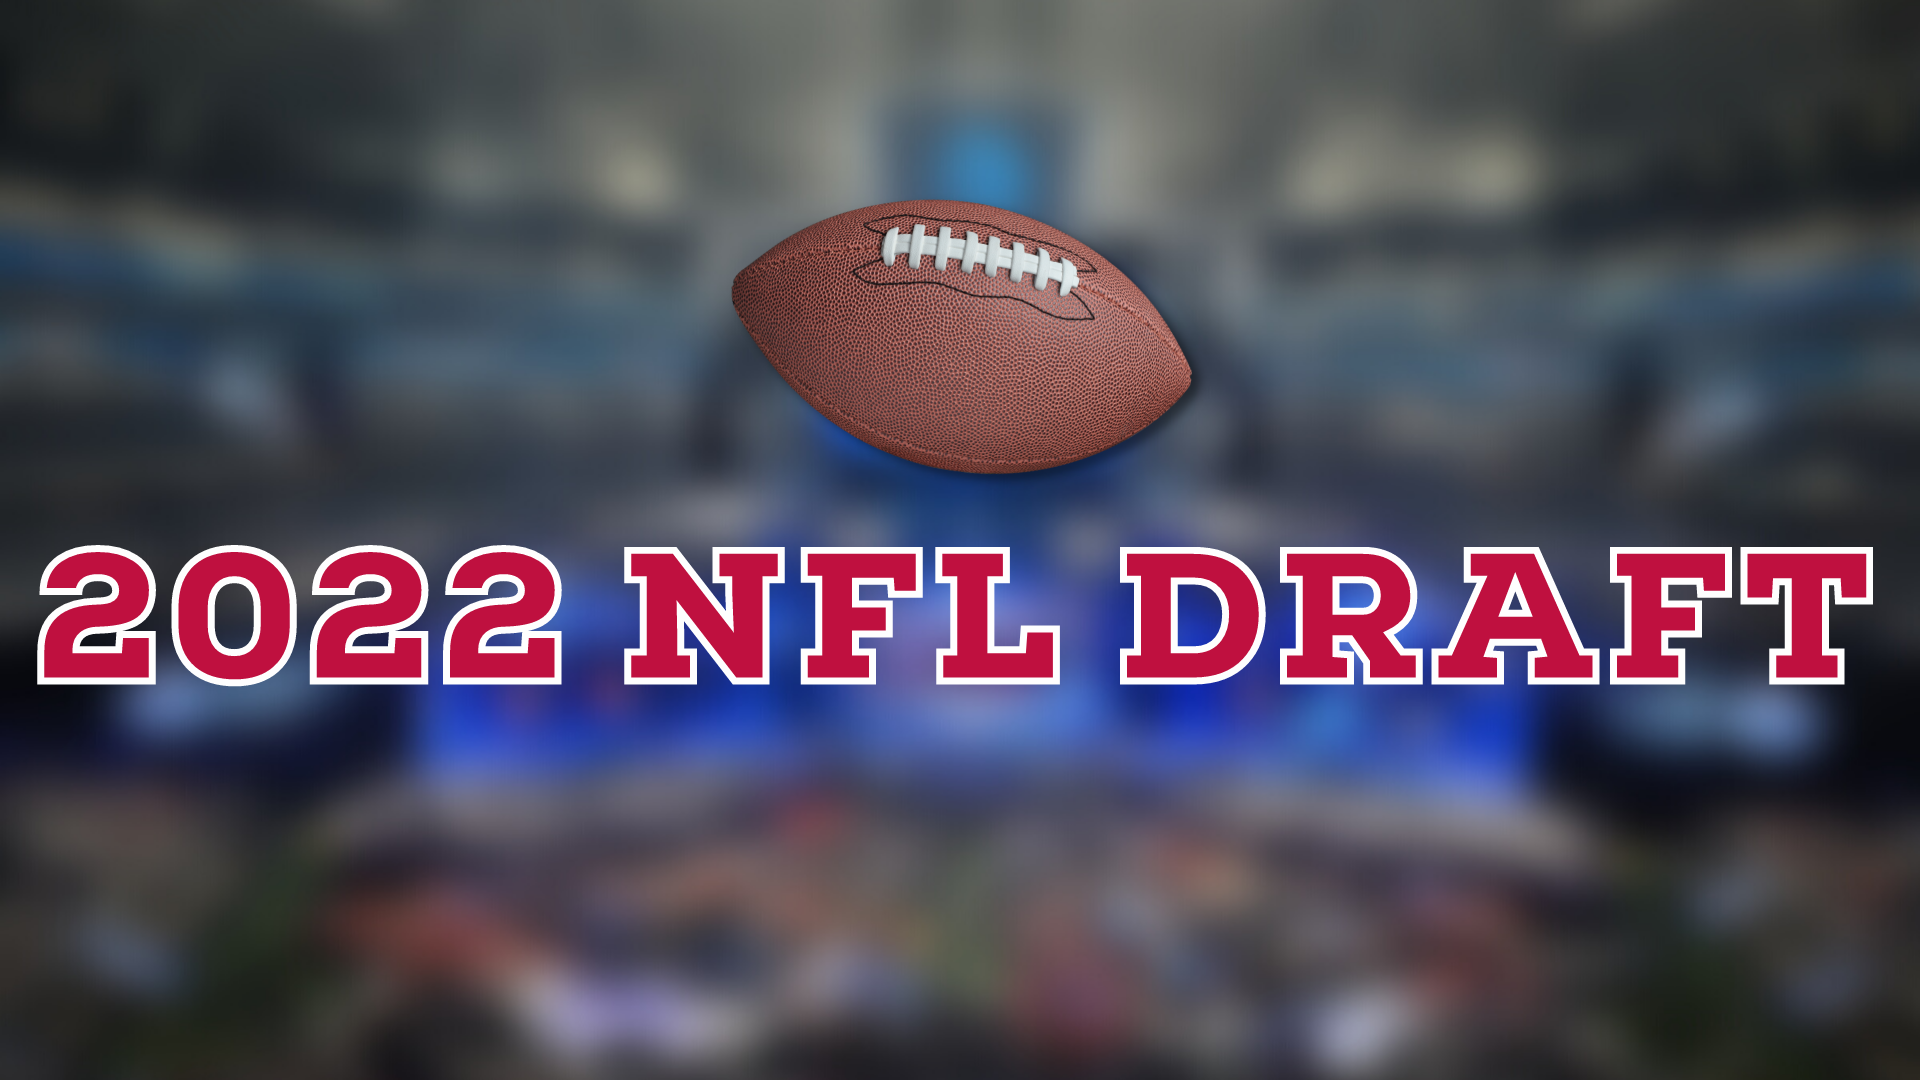 2022 NFL Draft Graphic